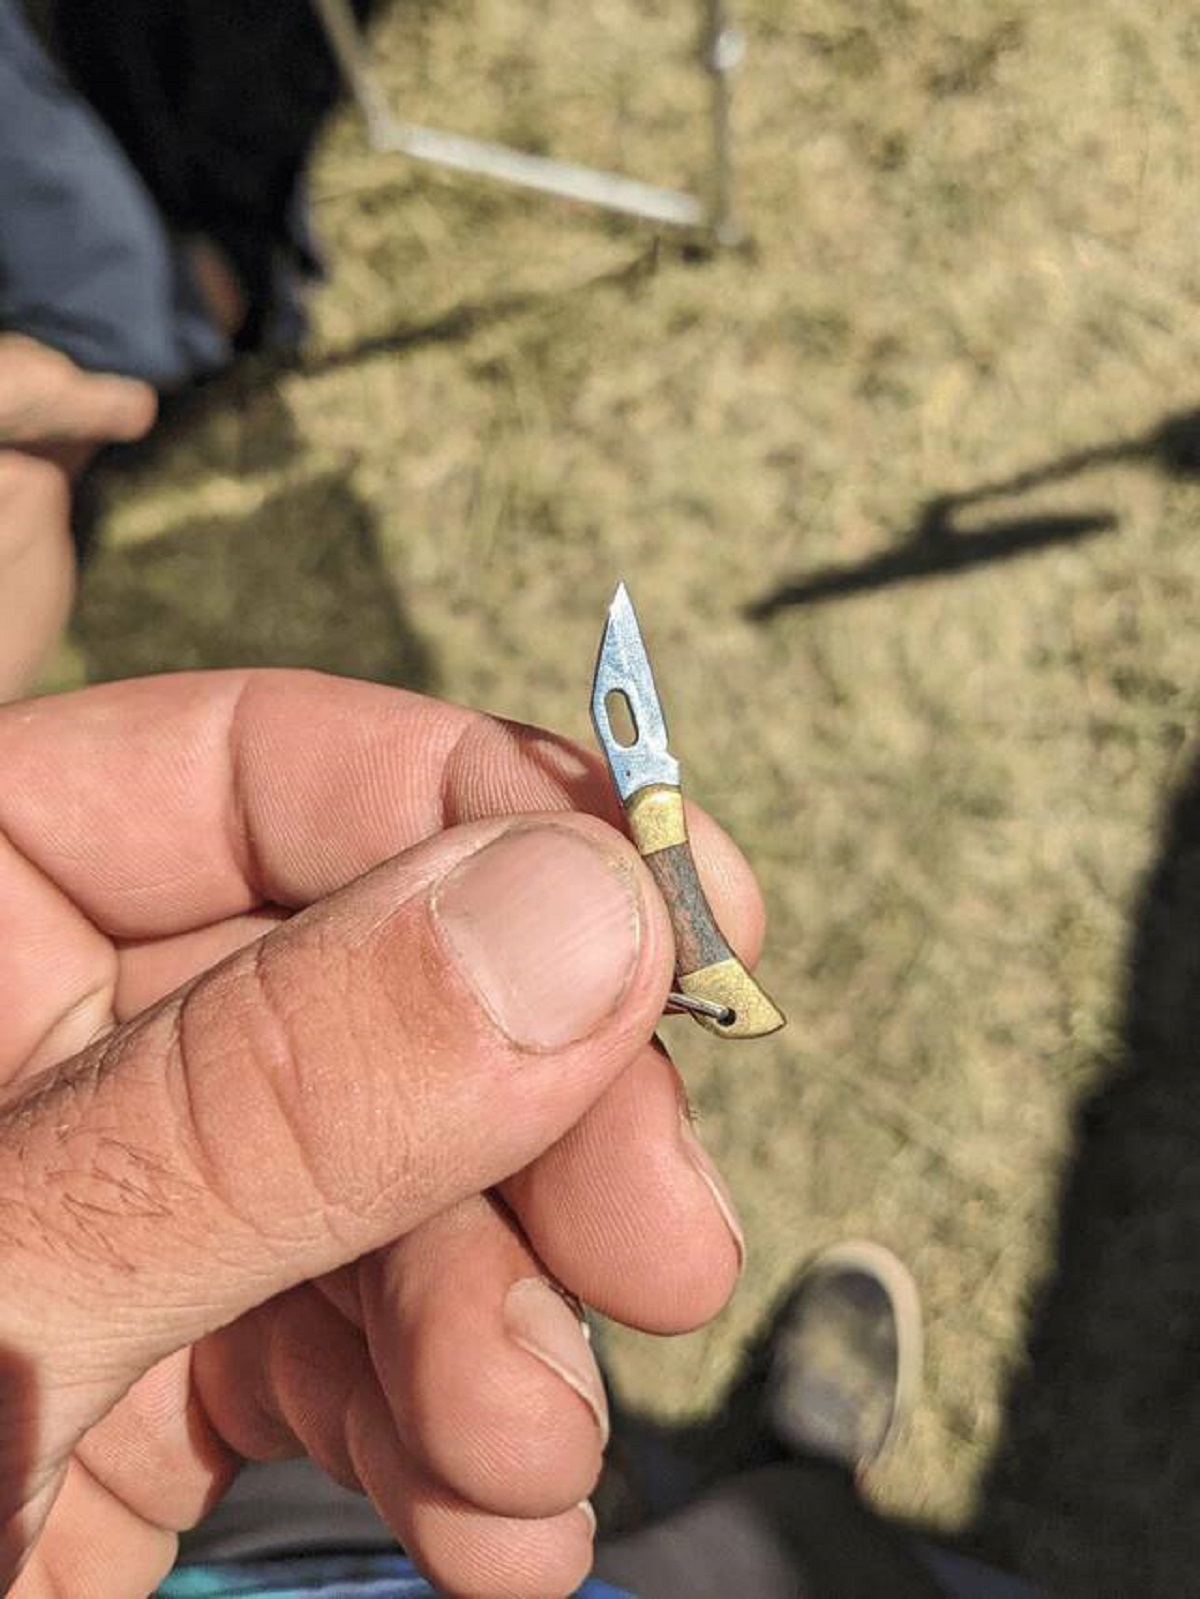 "I found a tiny pocket knife at a music festival."